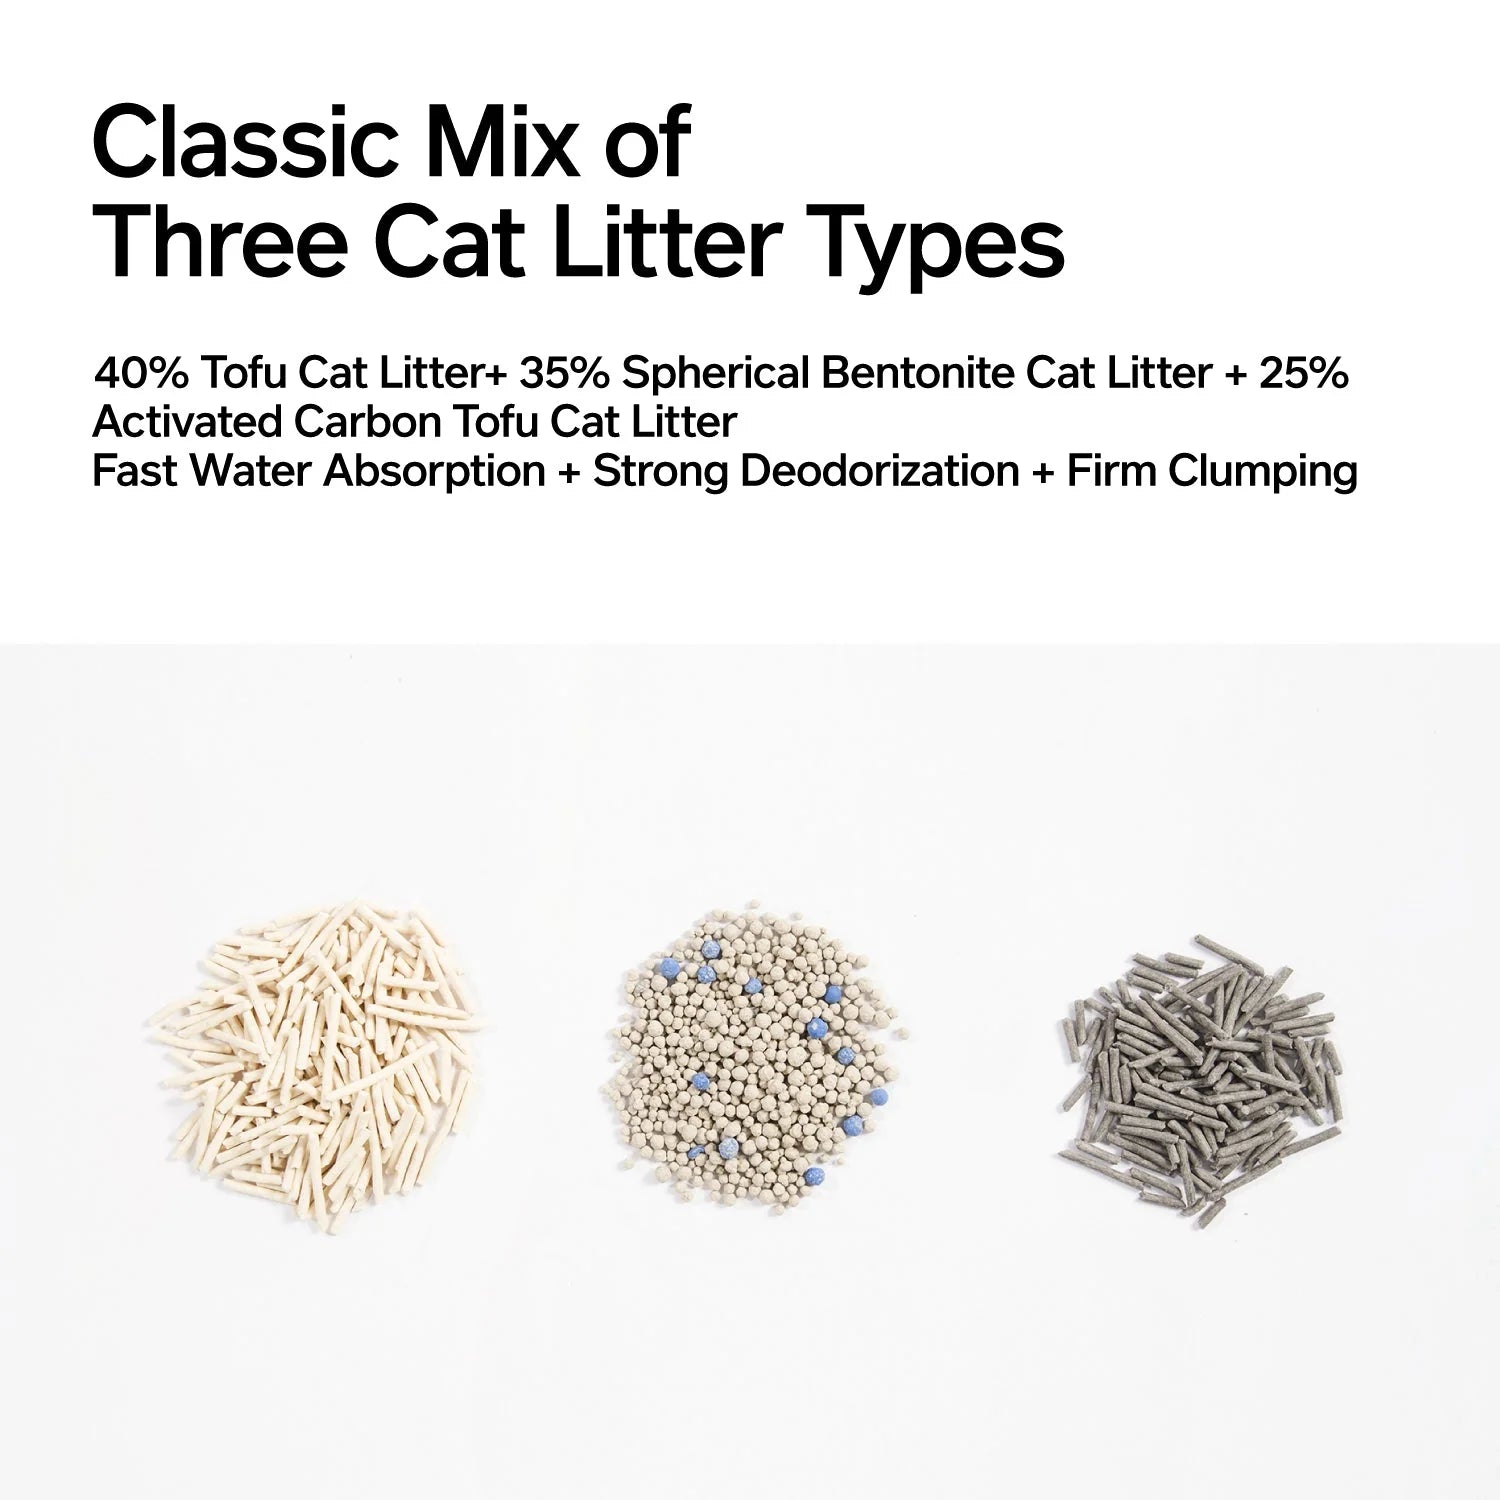 pidan 3-in-1 Mixed Cat Litter, Pail | 5.2 kg